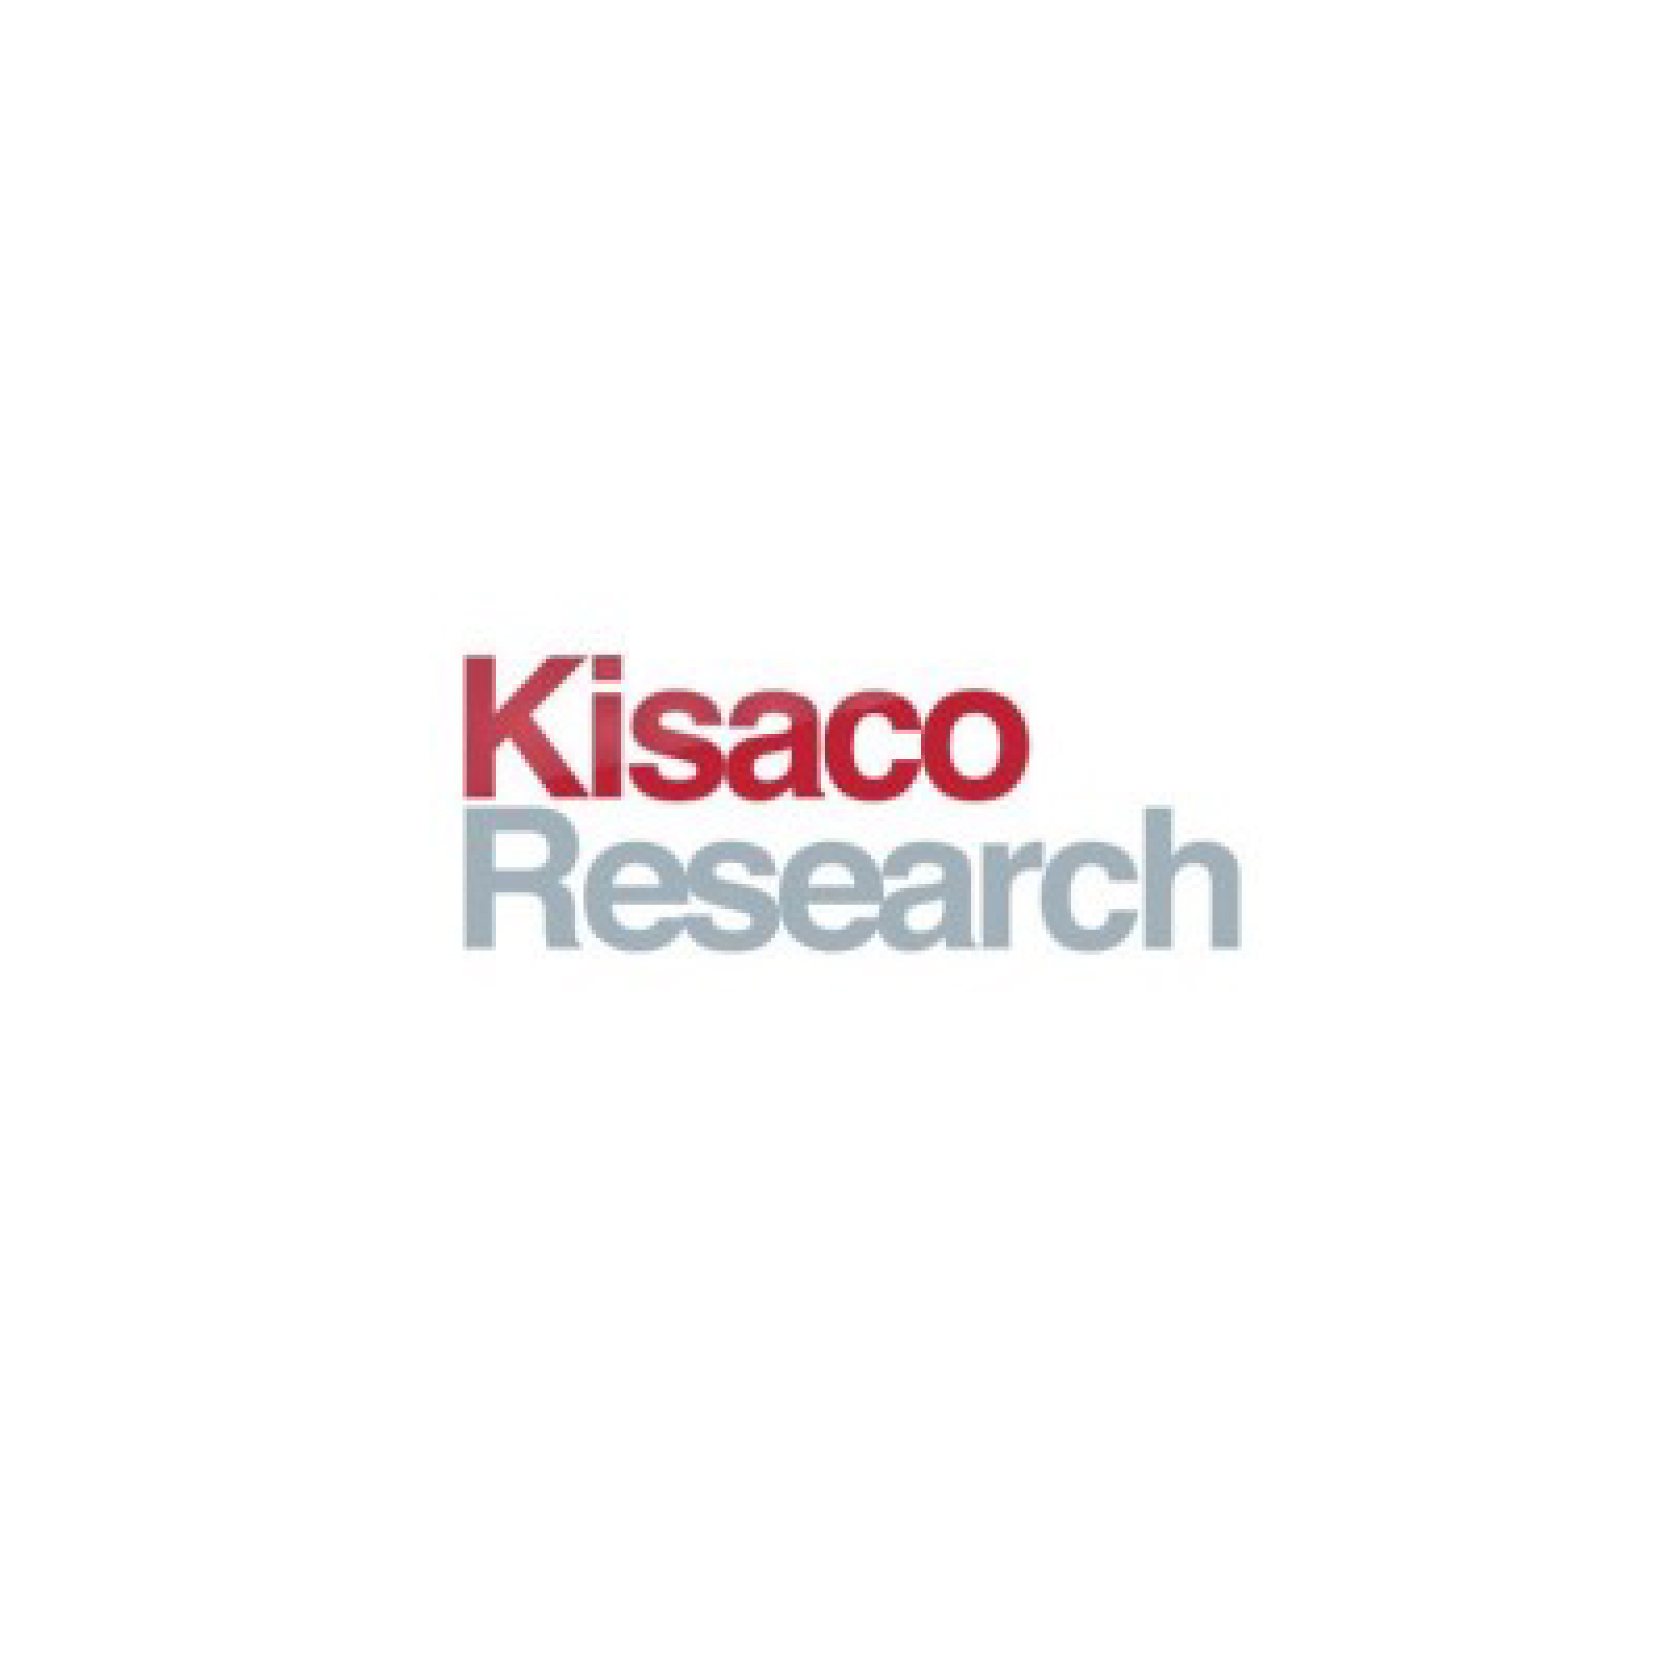 kisaco research